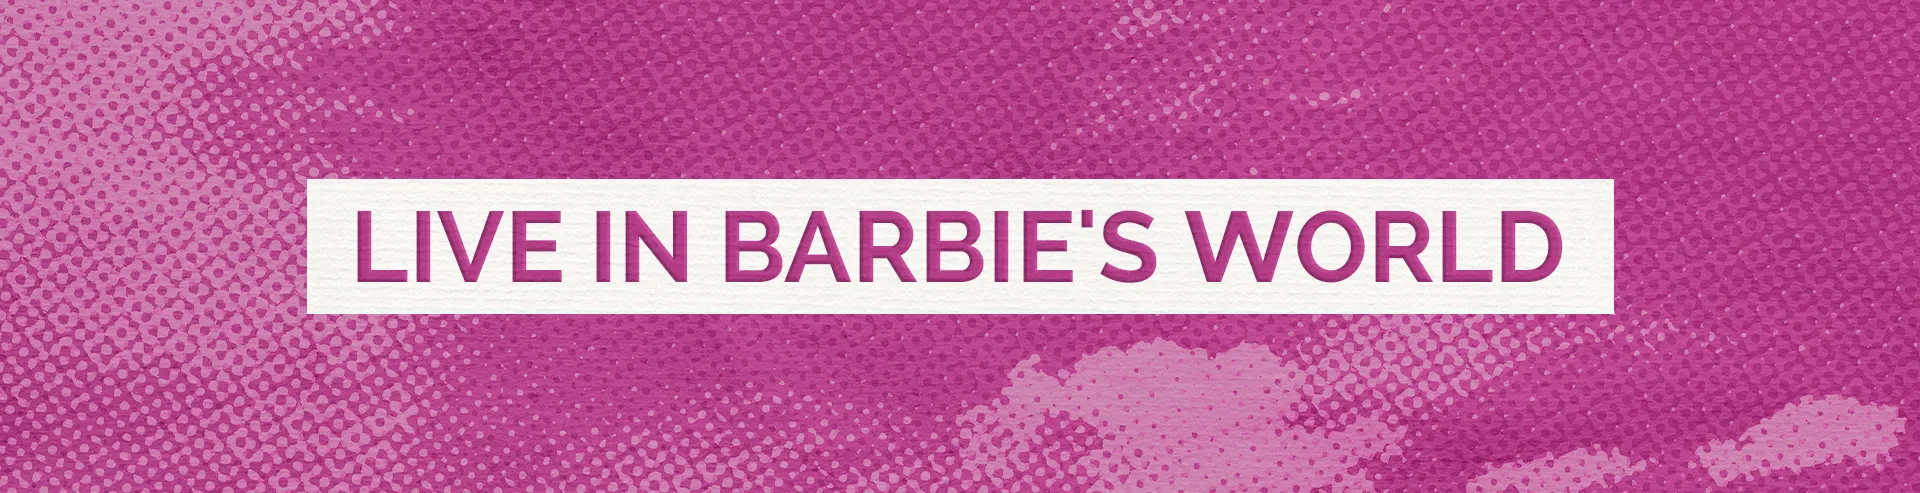 Full-Width-Gift-Ideas-Live-In-Barbie's-World-1920x493.webp